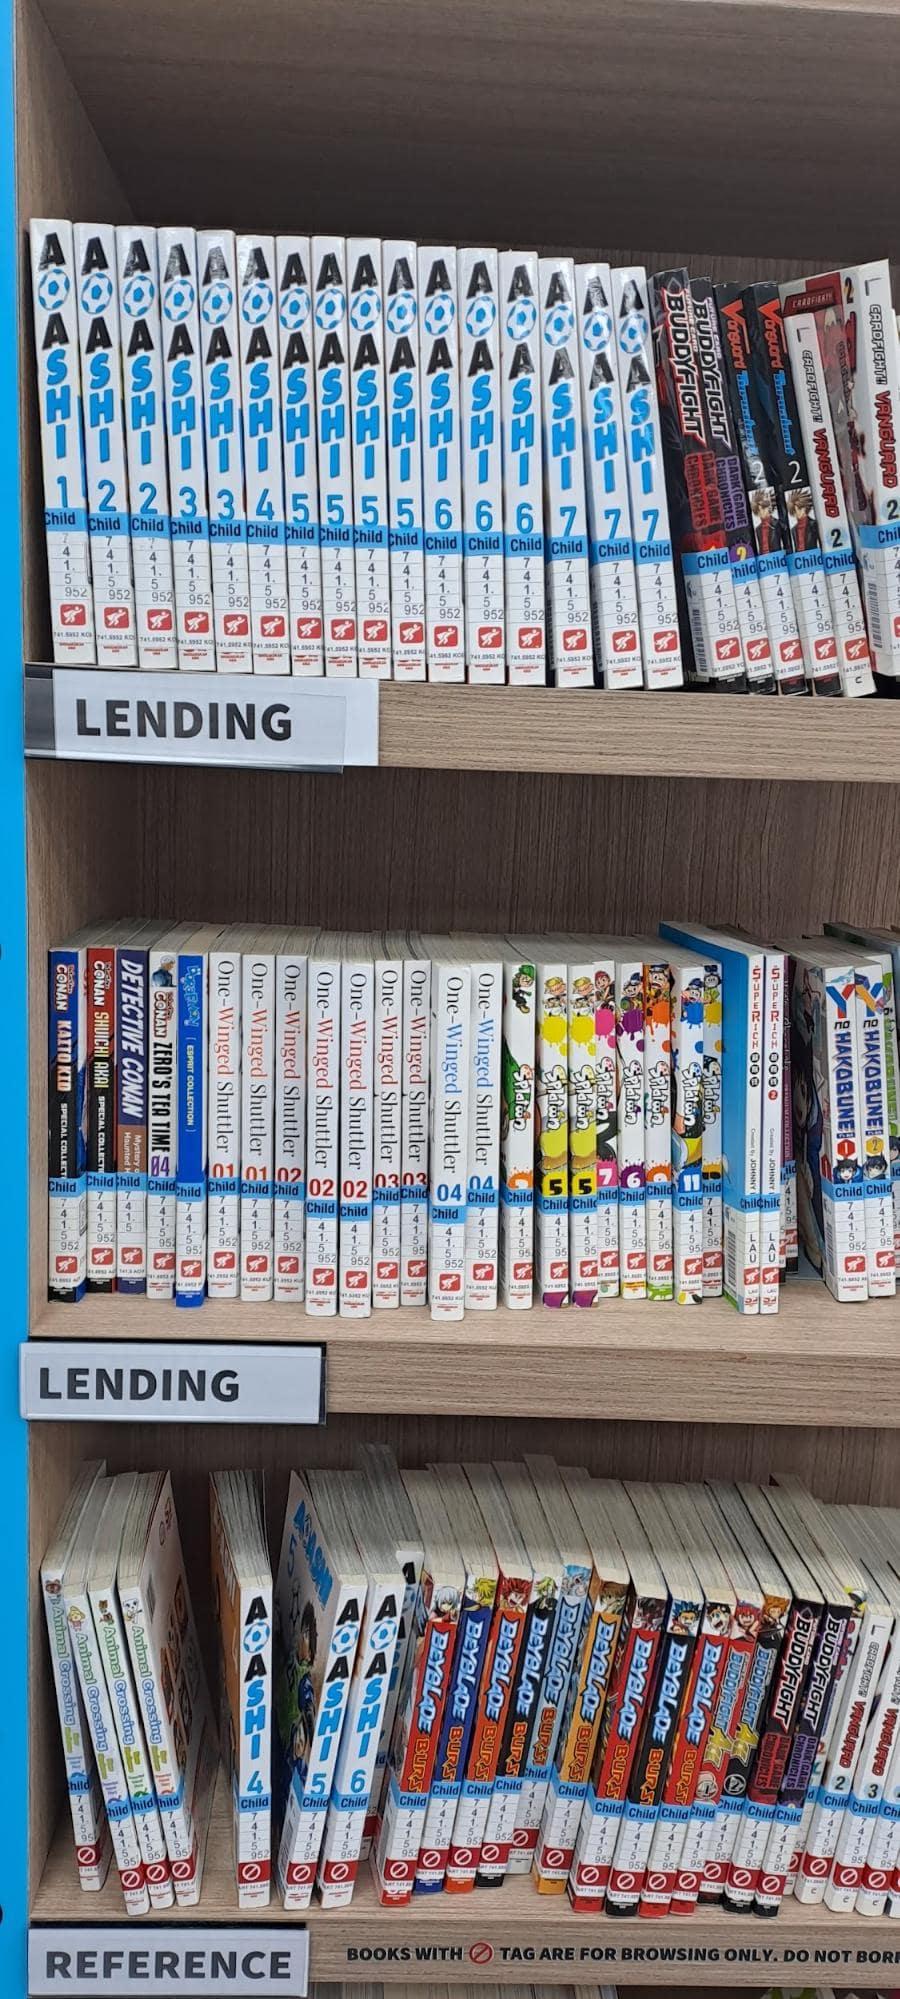 NLB Manga Library - Reference books